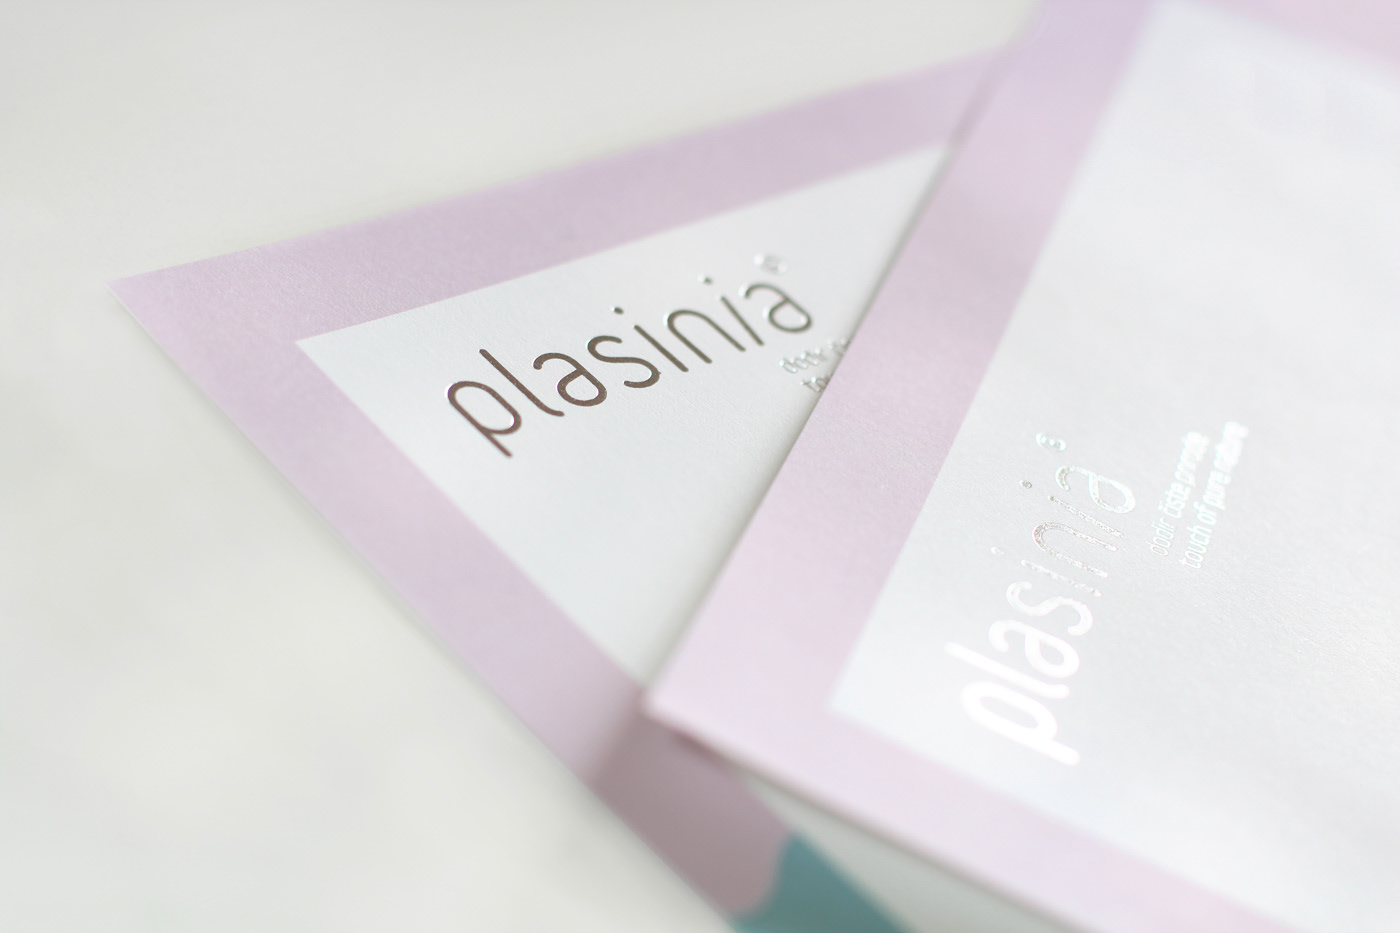 Plasinia Natural Cosmetics Visual Identity by Design Bureau Izvorka Jurić Inspired by the Lika Region